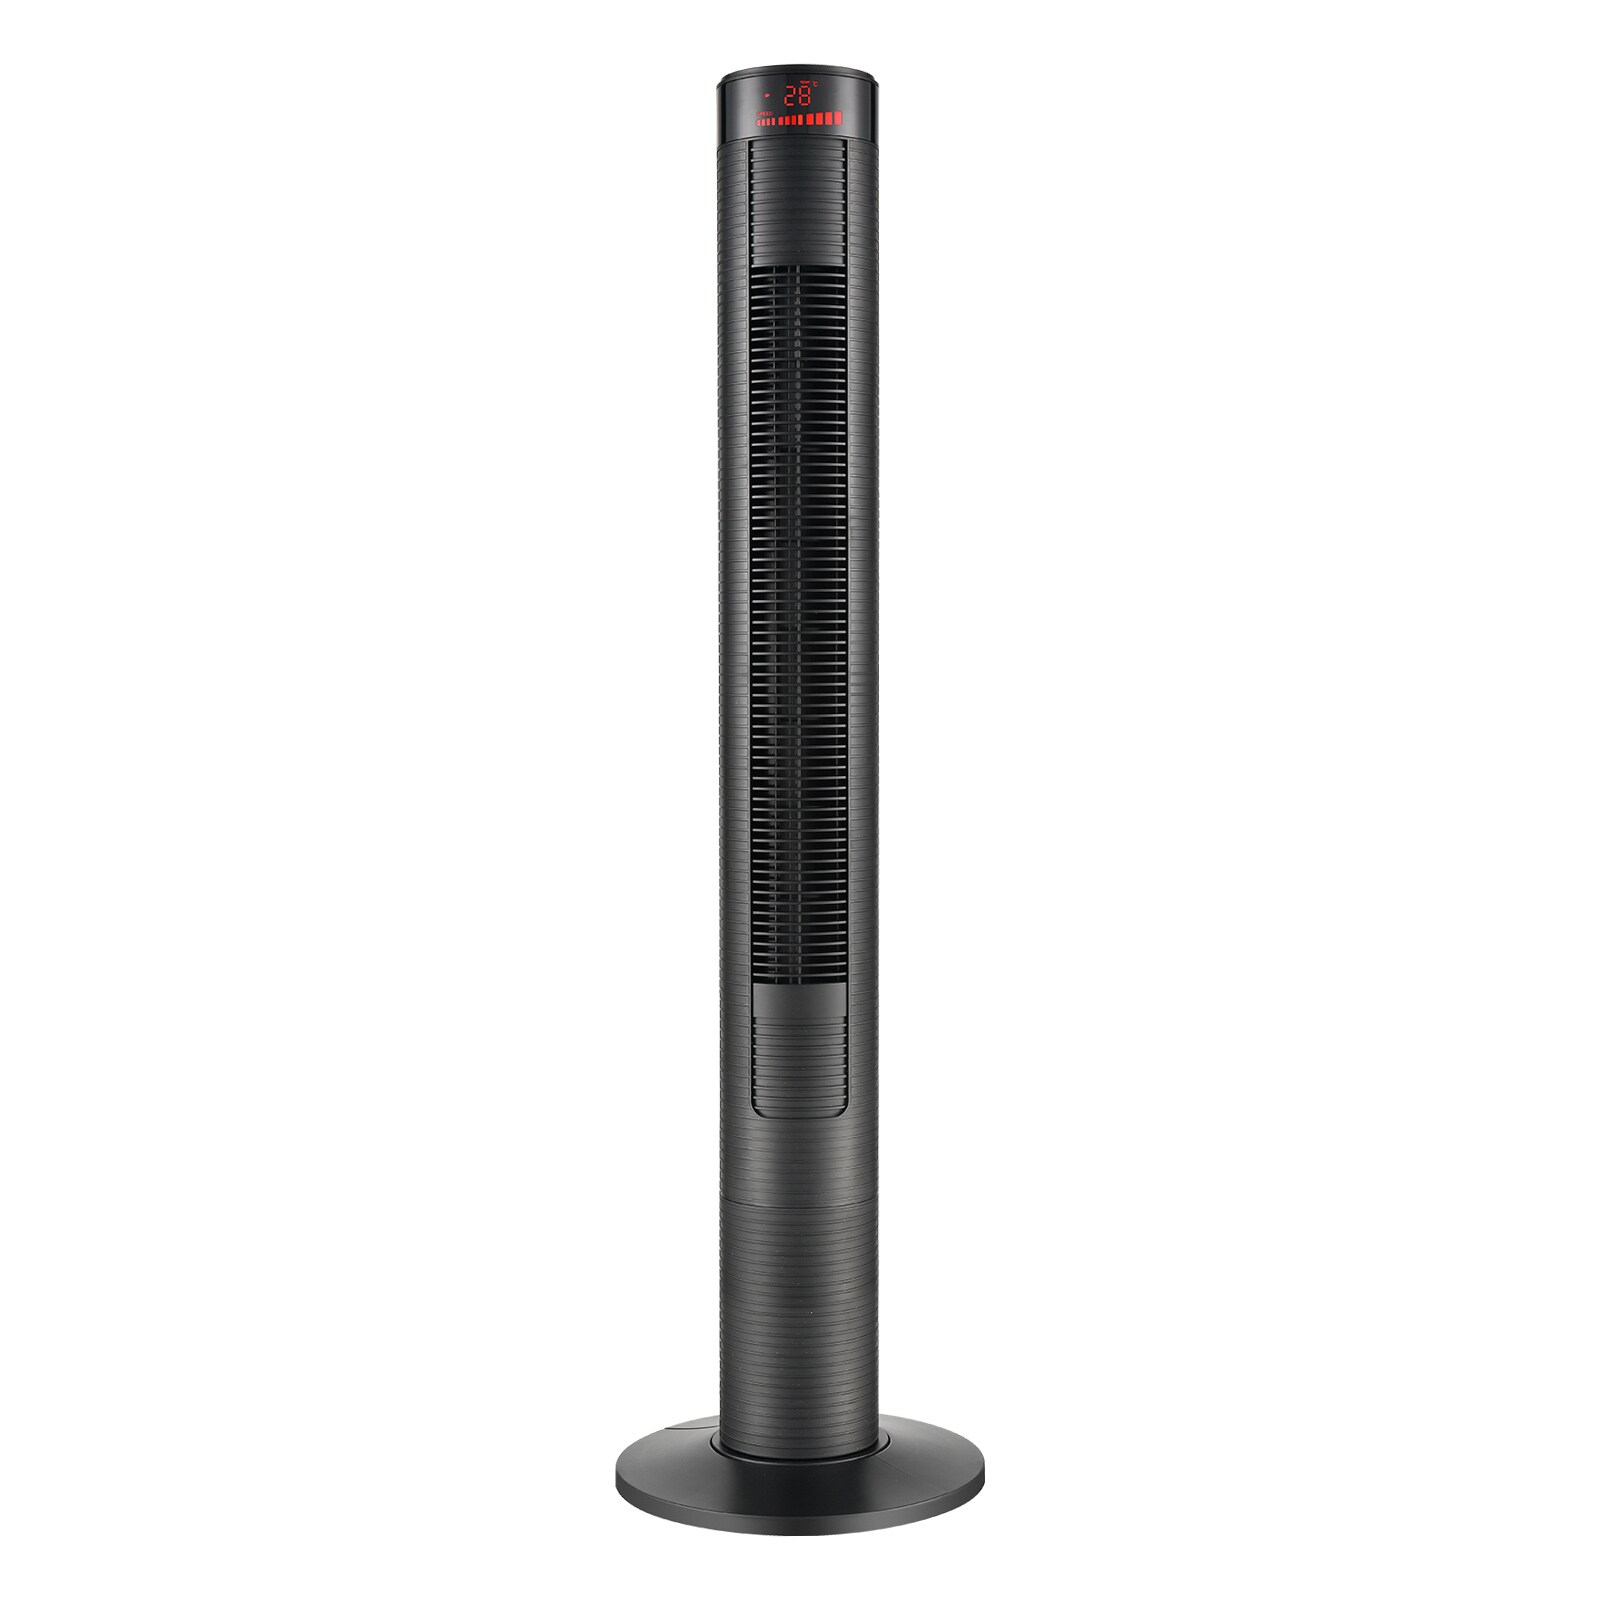 HOMCOM Turmventilator mit Fernbedienung schwarz 31,5 x 117 cm (ØxH) Säulenventilator Klimagerät Ventilator Kühlung